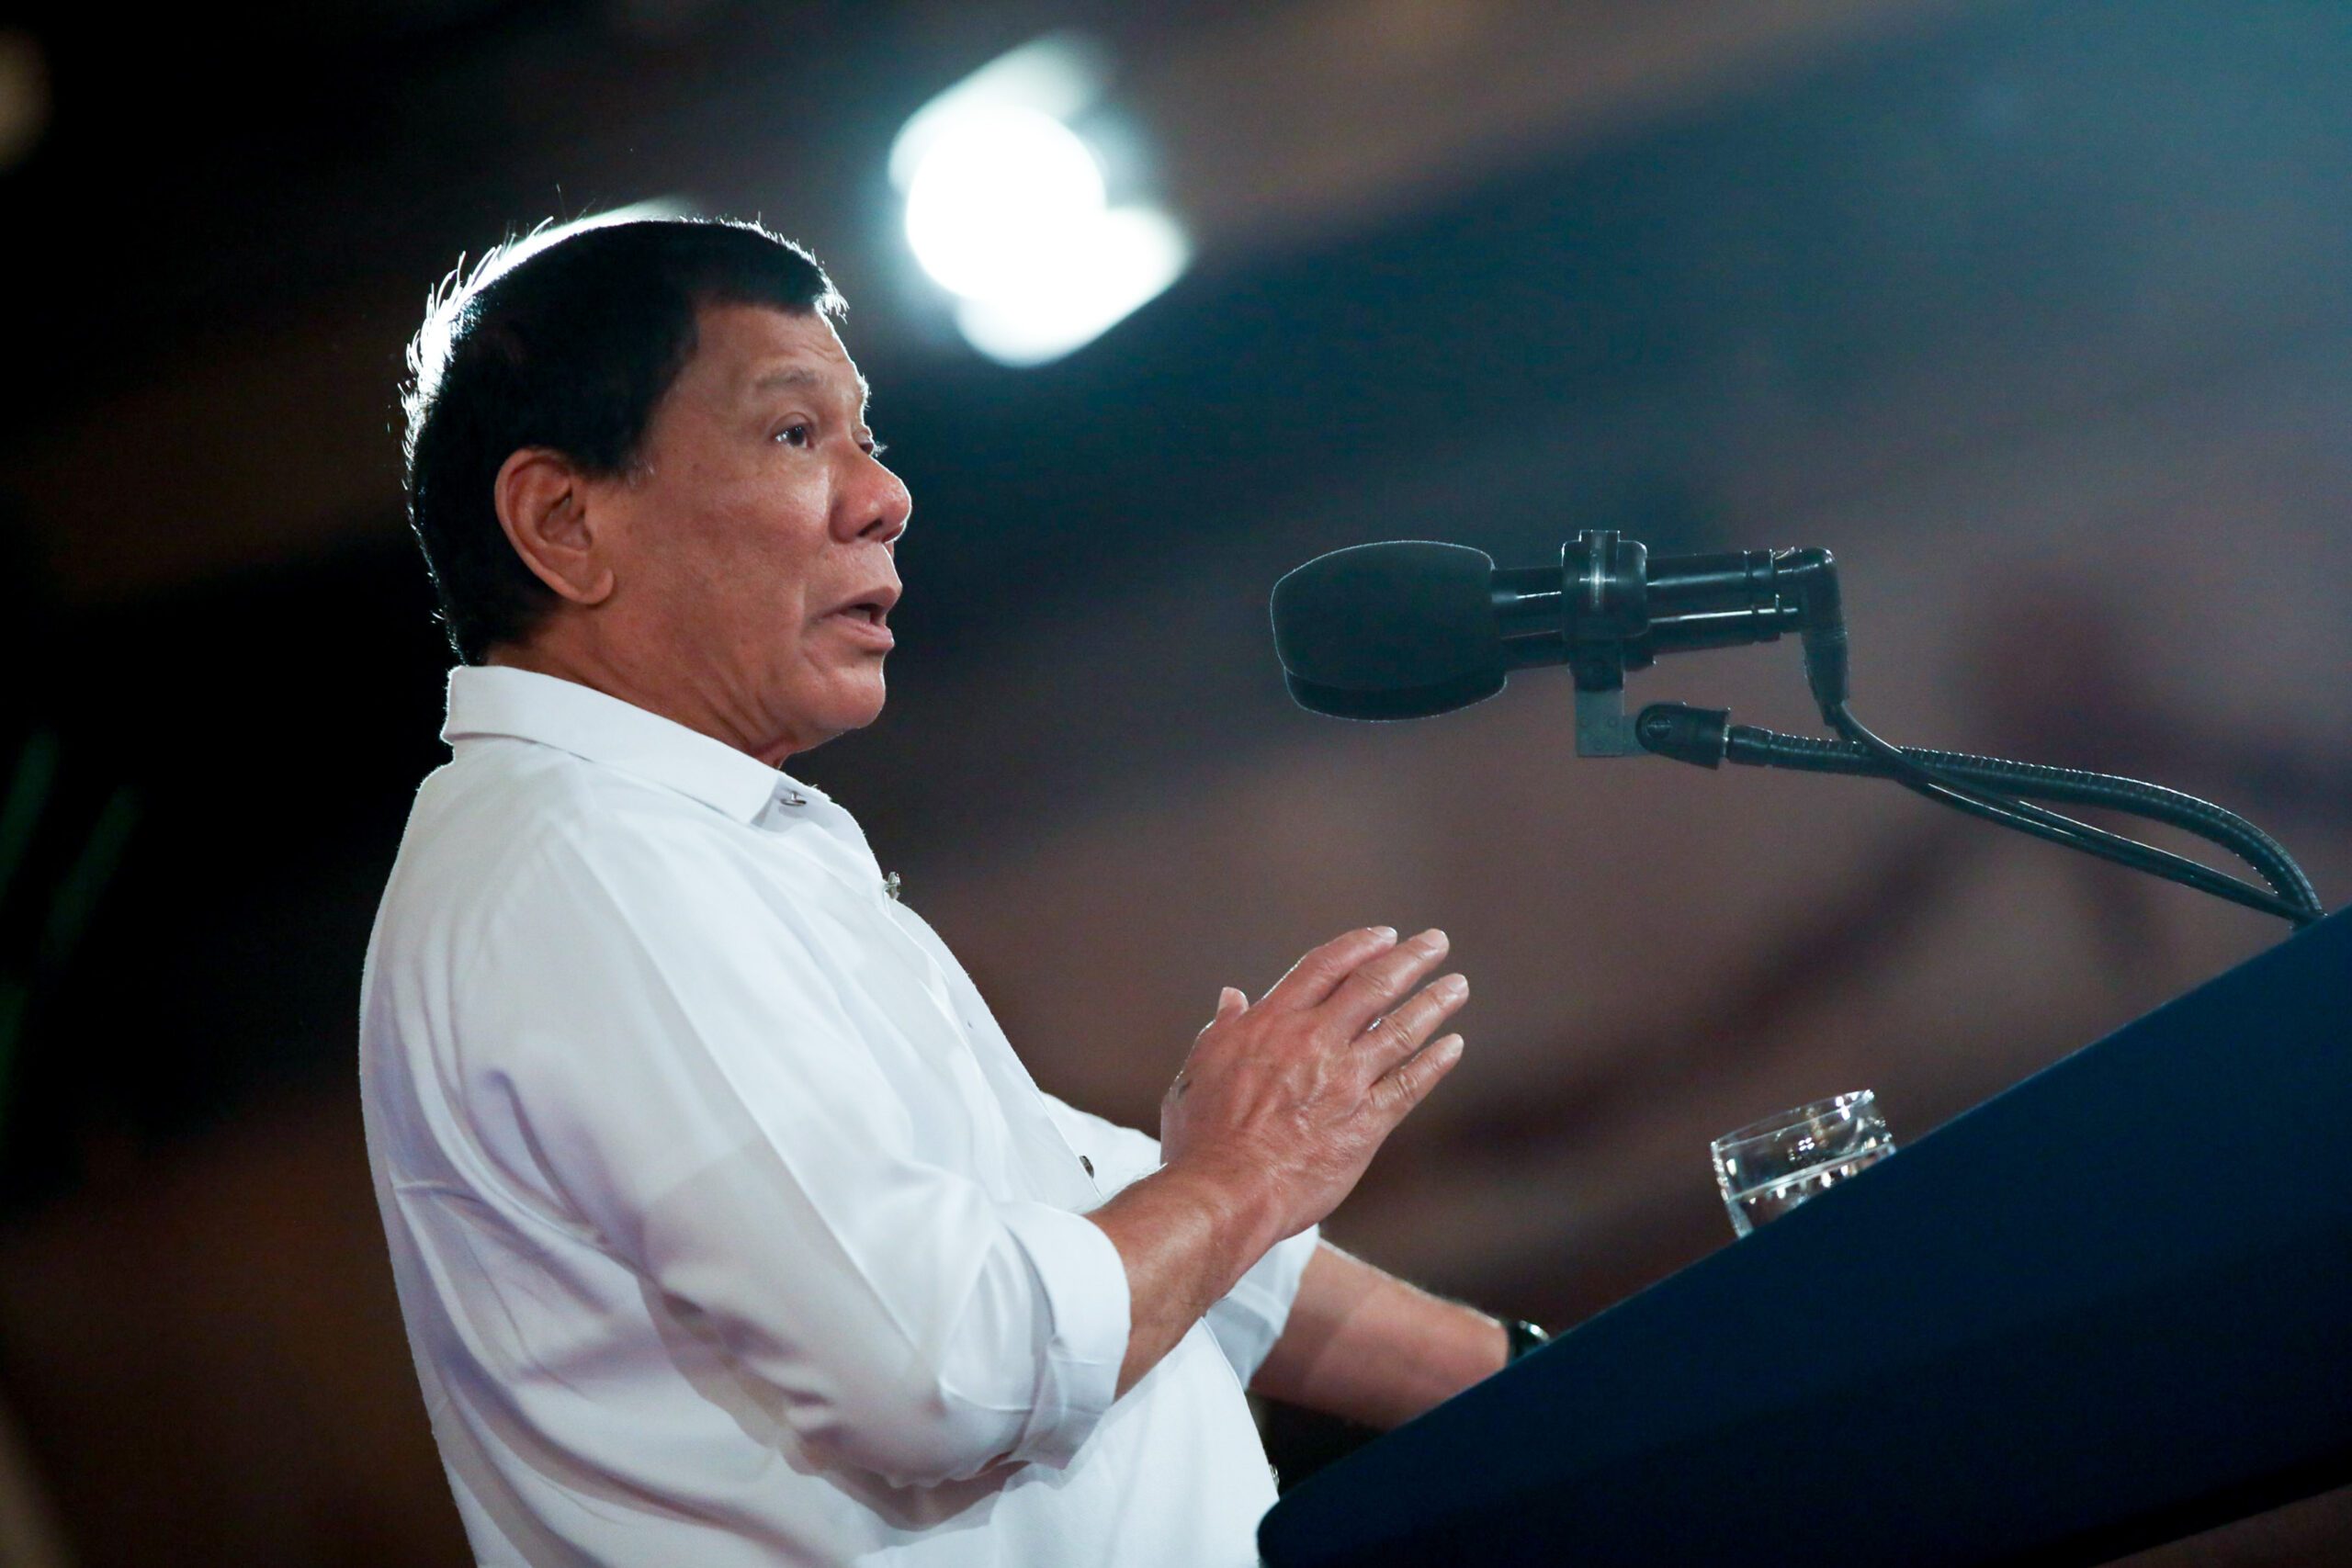 On Eid’l Adha, Duterte calls for unity amidst ‘violence, discord’